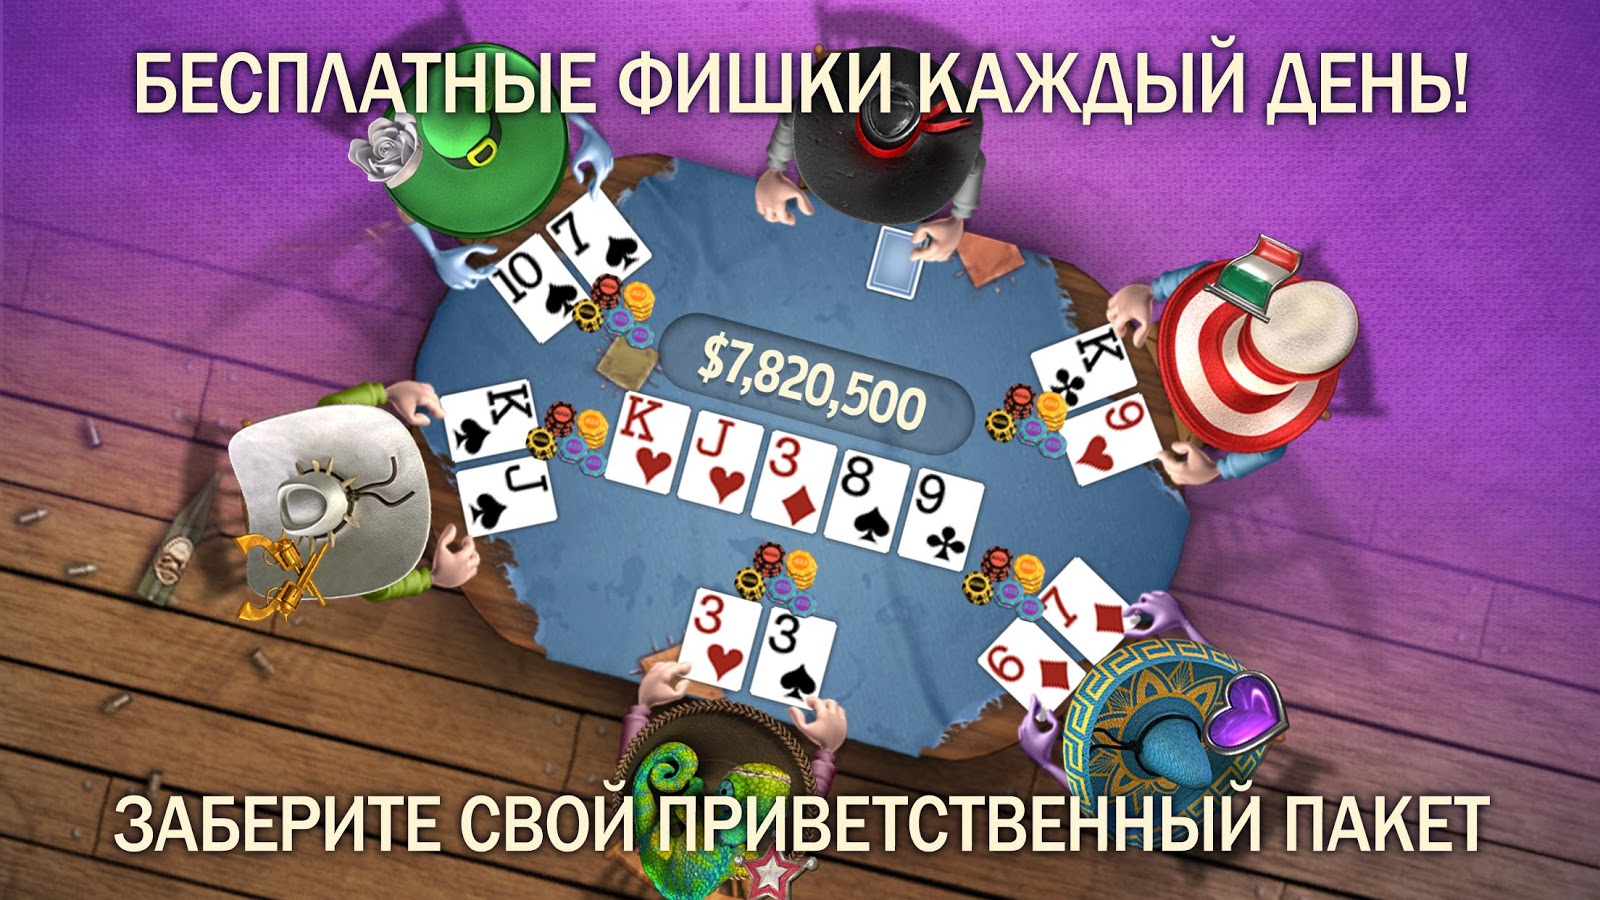 download governor poker 3 offline pc win 7 full version crack